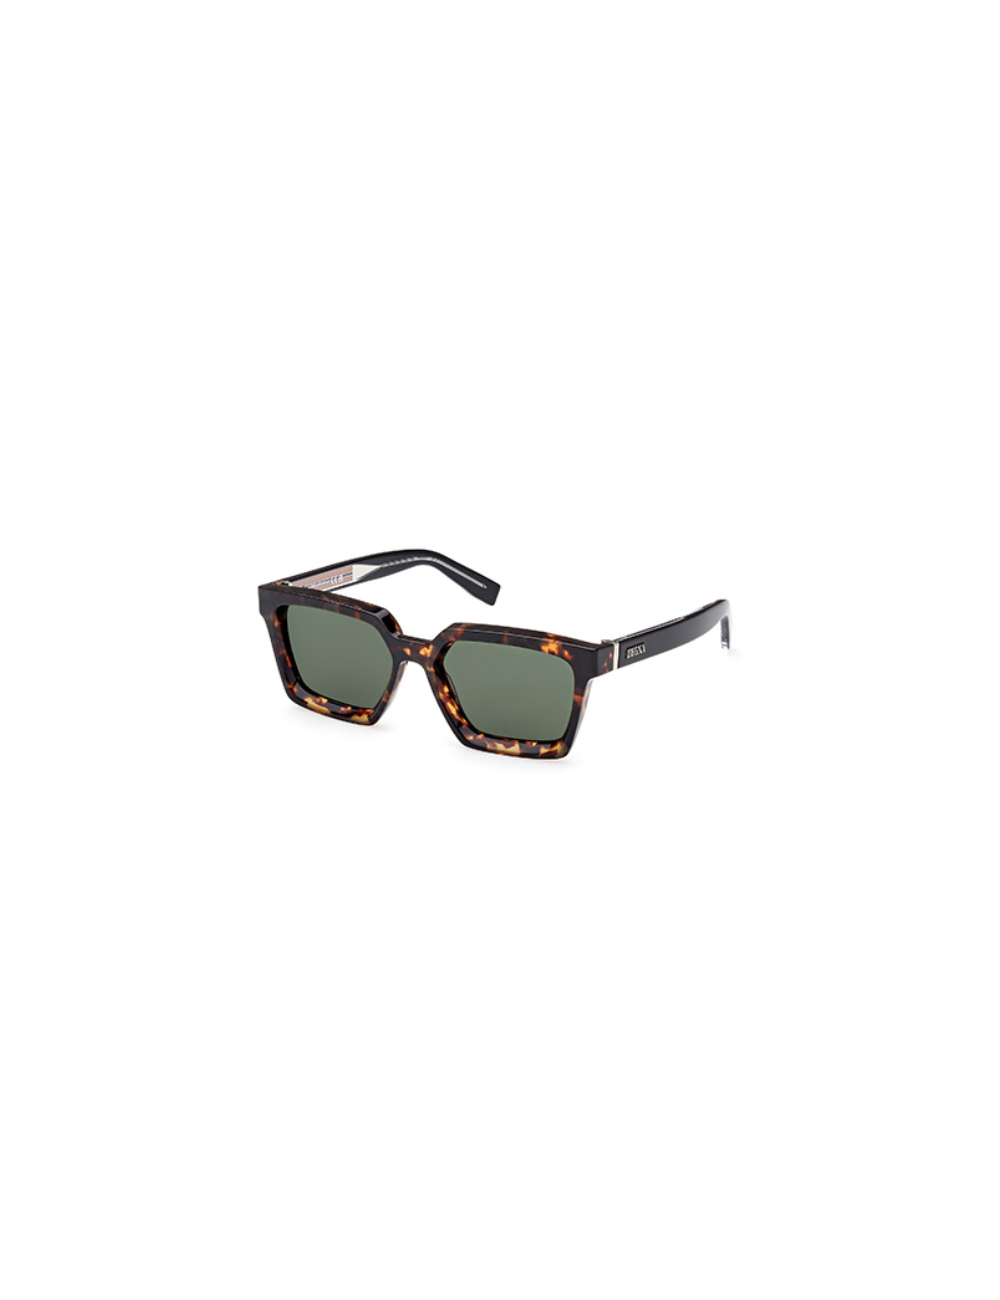 CELINE Polarized Square Sunglasses, 55mm